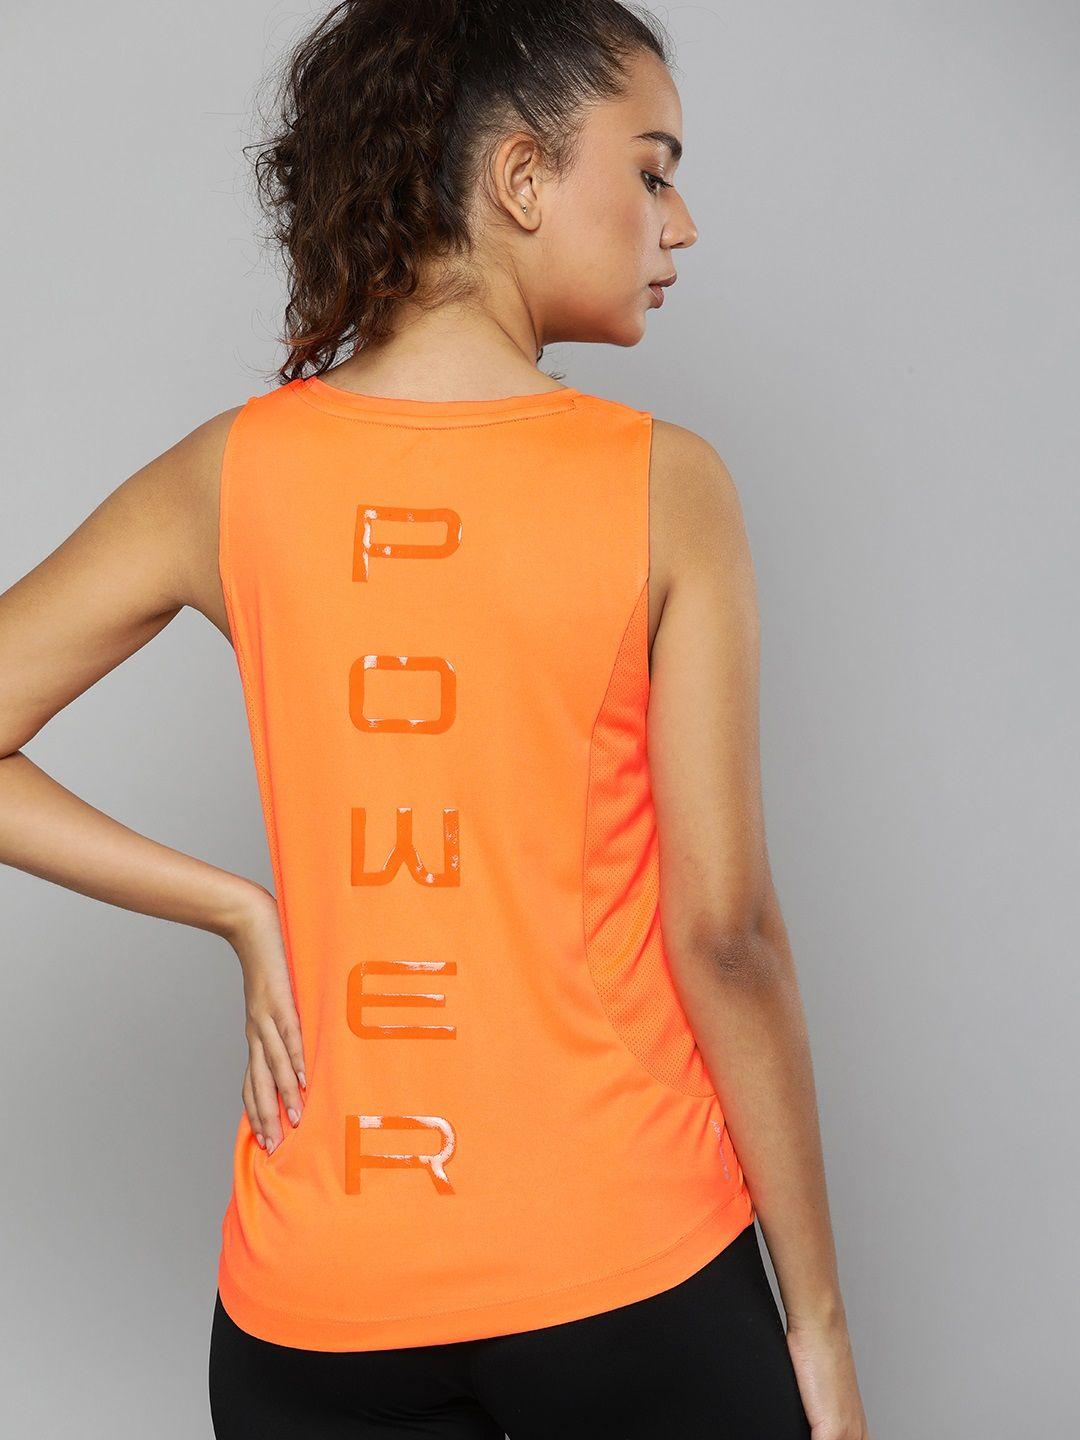 hrx-by-hrithik-roshan-training-women-orange-rapid-dry-typography-top